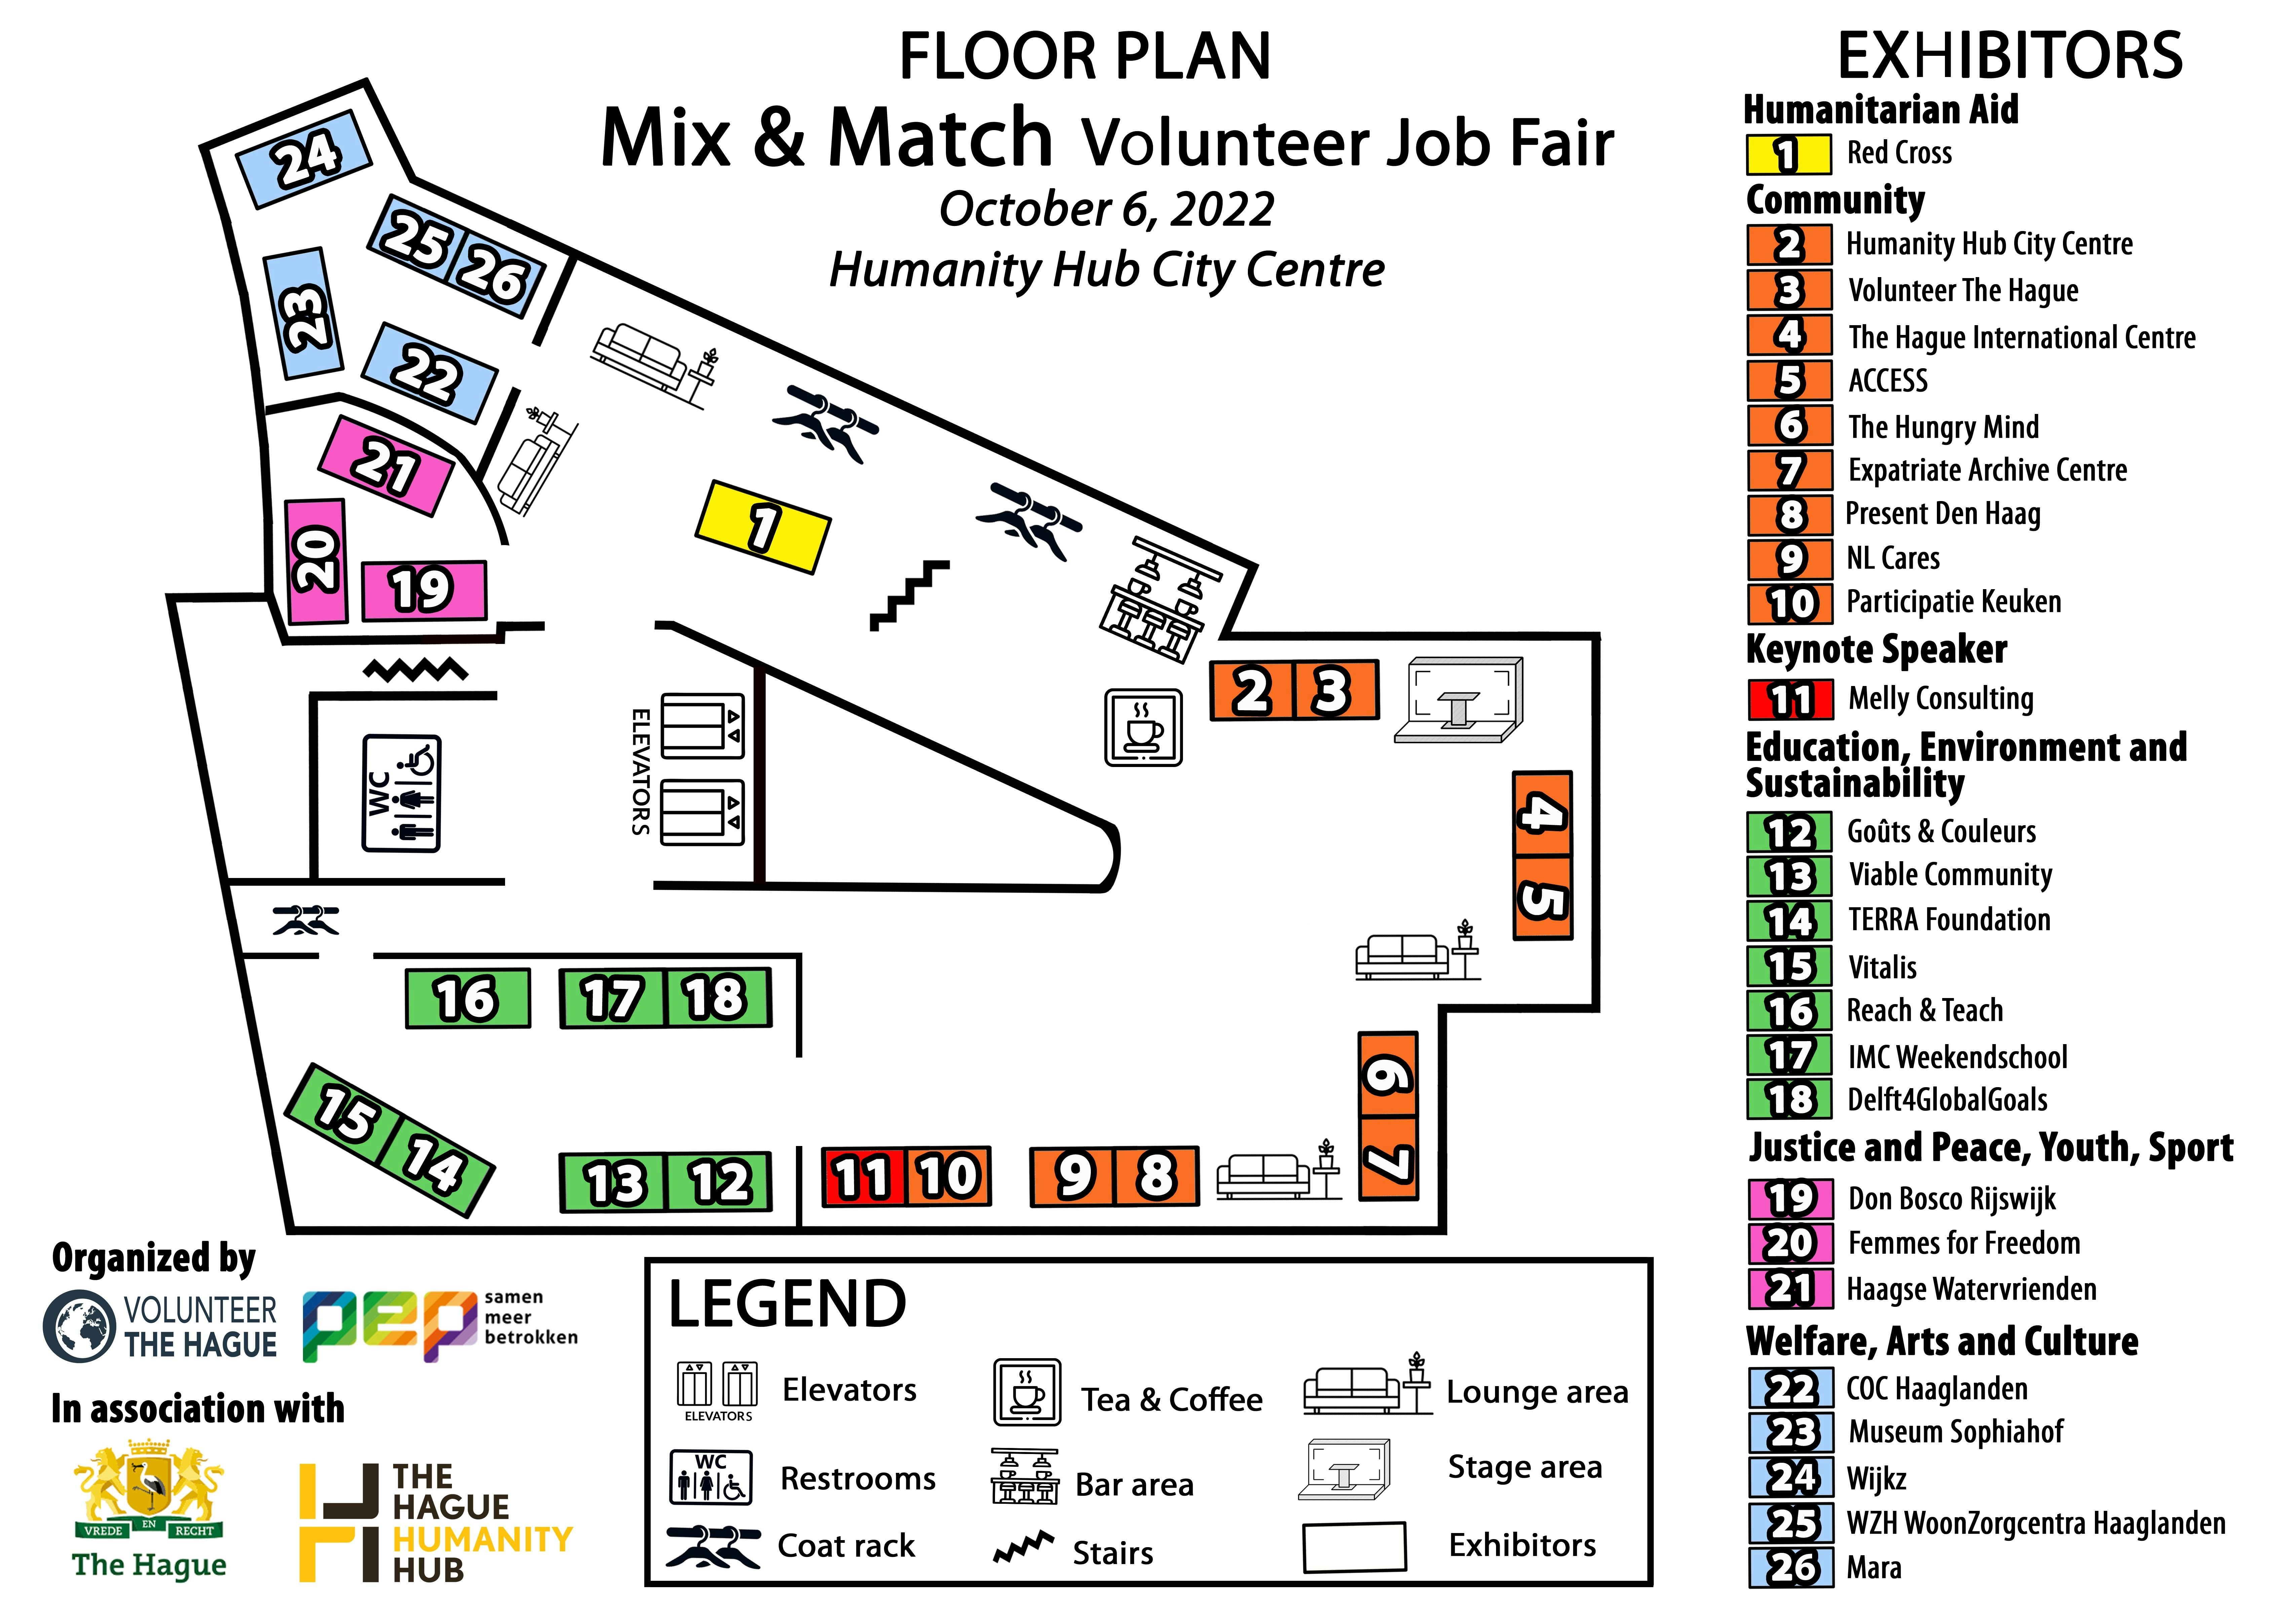 Mix & Match volunteer job fair - floor plan